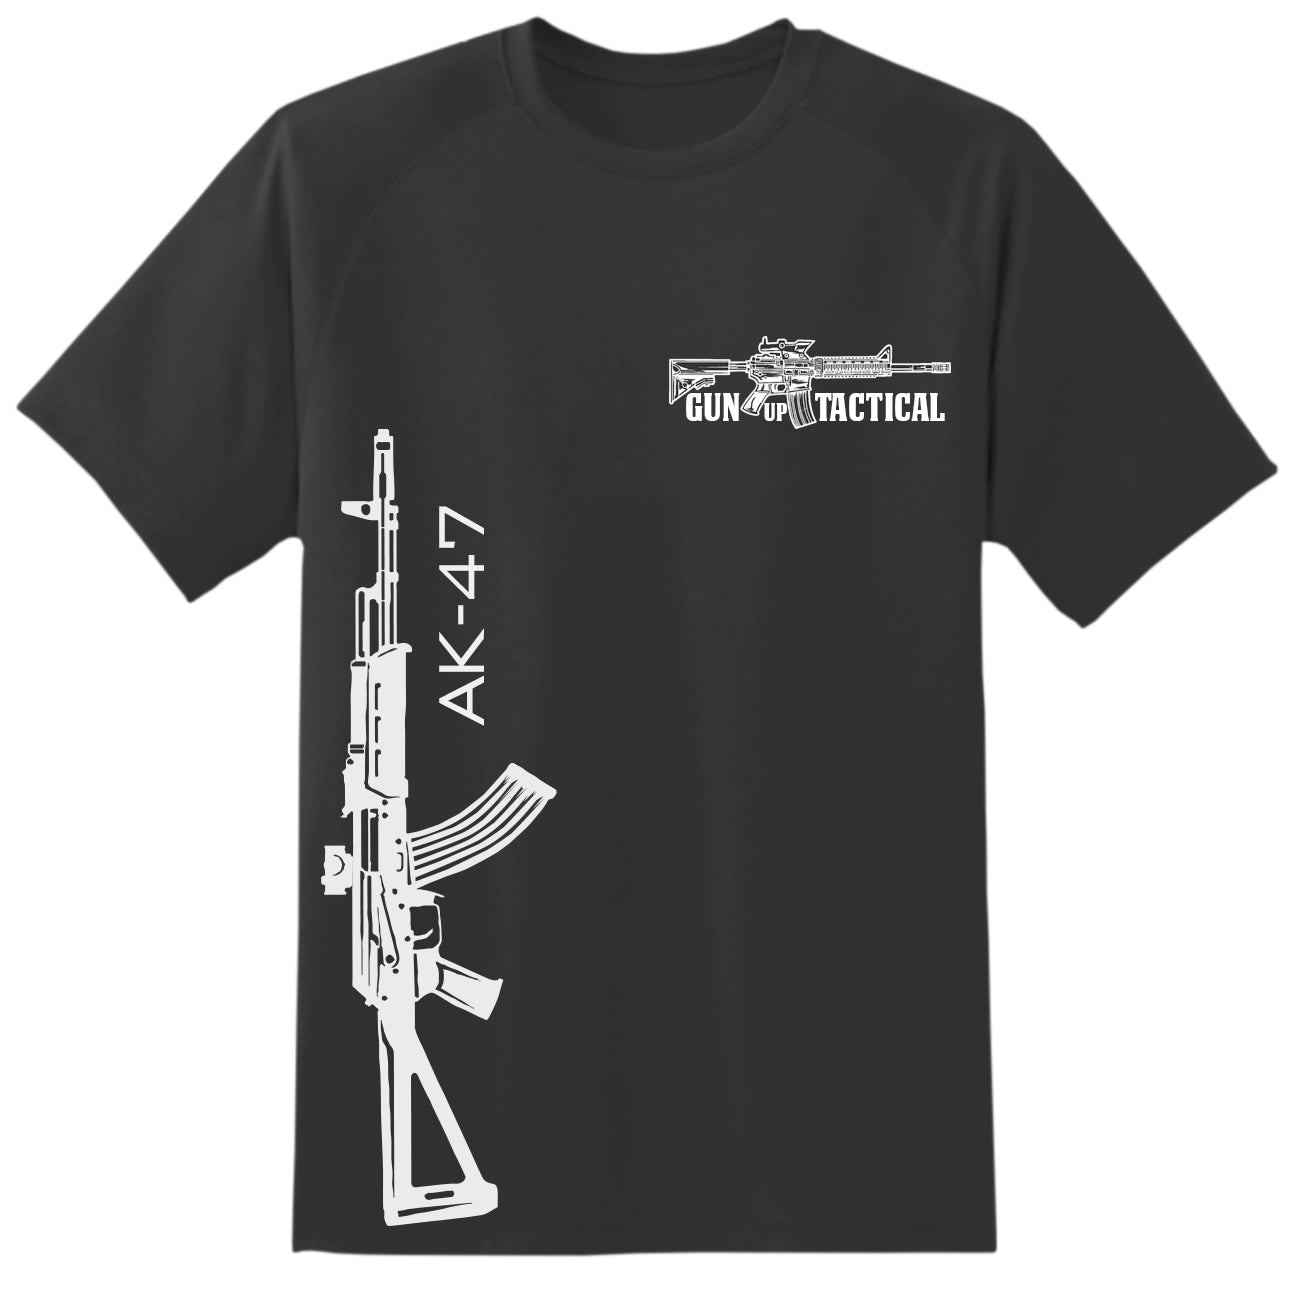 AK-47 T-Shirt - Gun Up Tactical